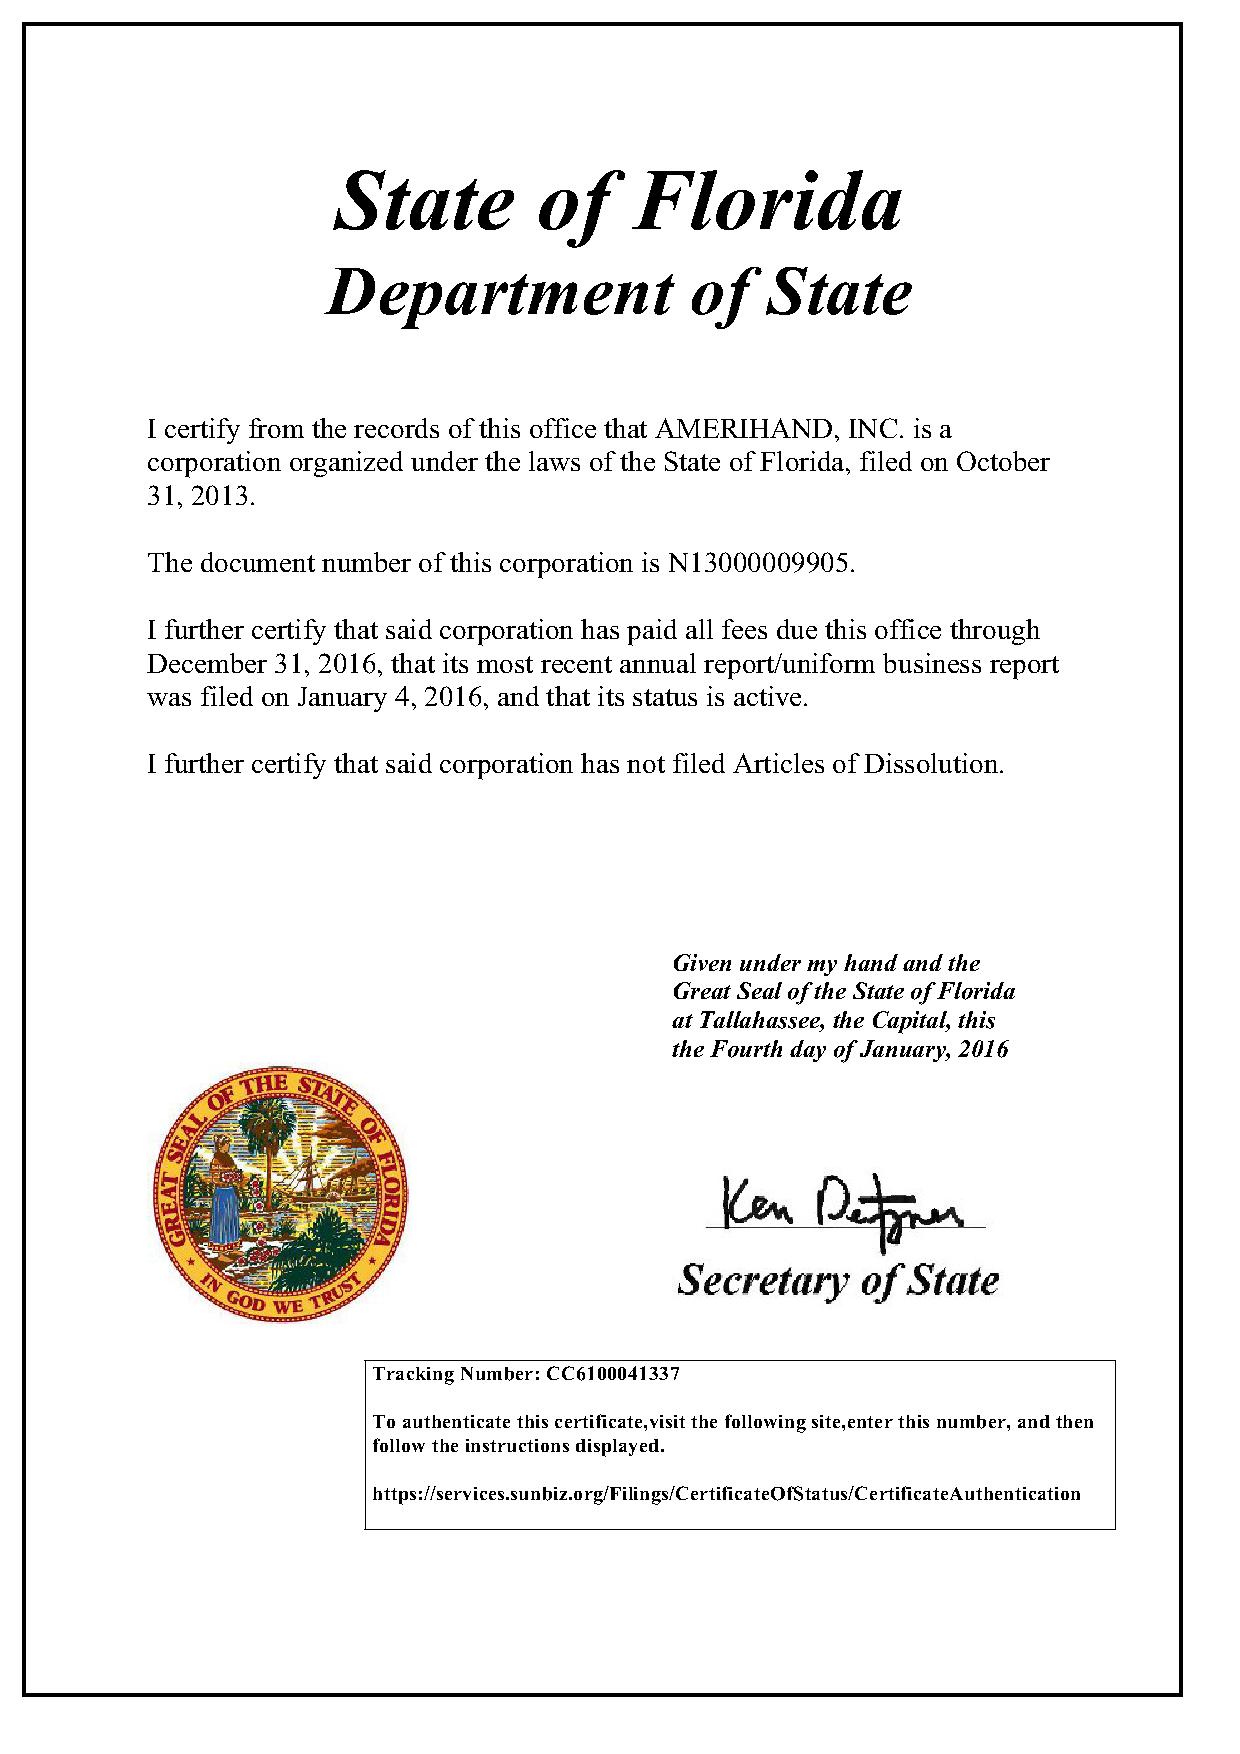 AmeriHand Corporate Status Certificate